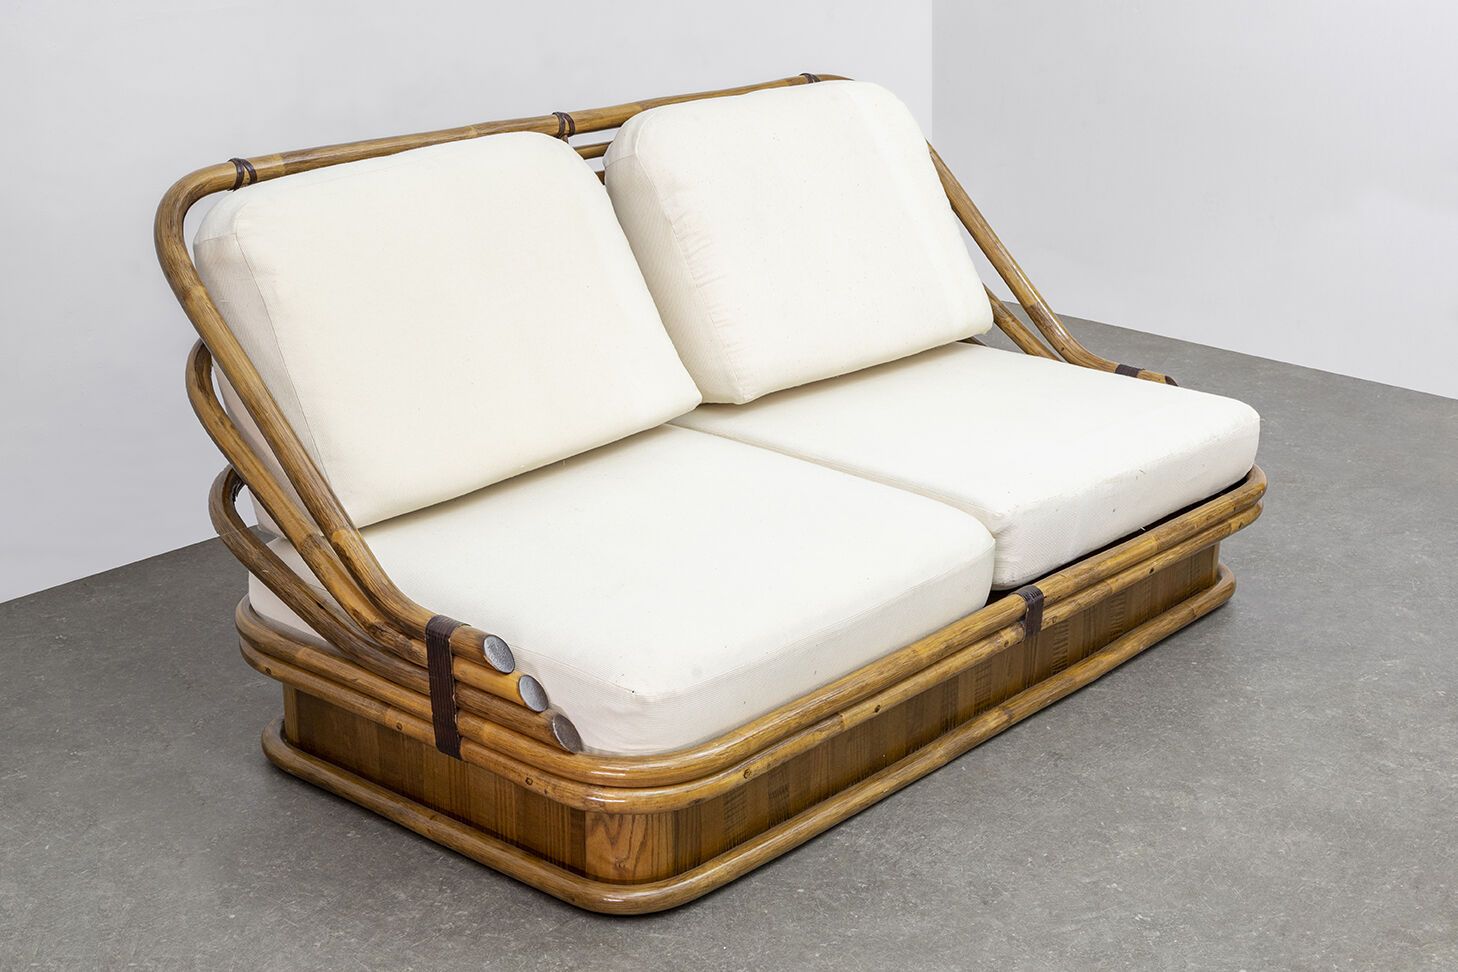 FABIO LENCI (Né en 1935) FABIO LENCI (BORN IN 1935)

Two seater sofa in rattan, &hellip;